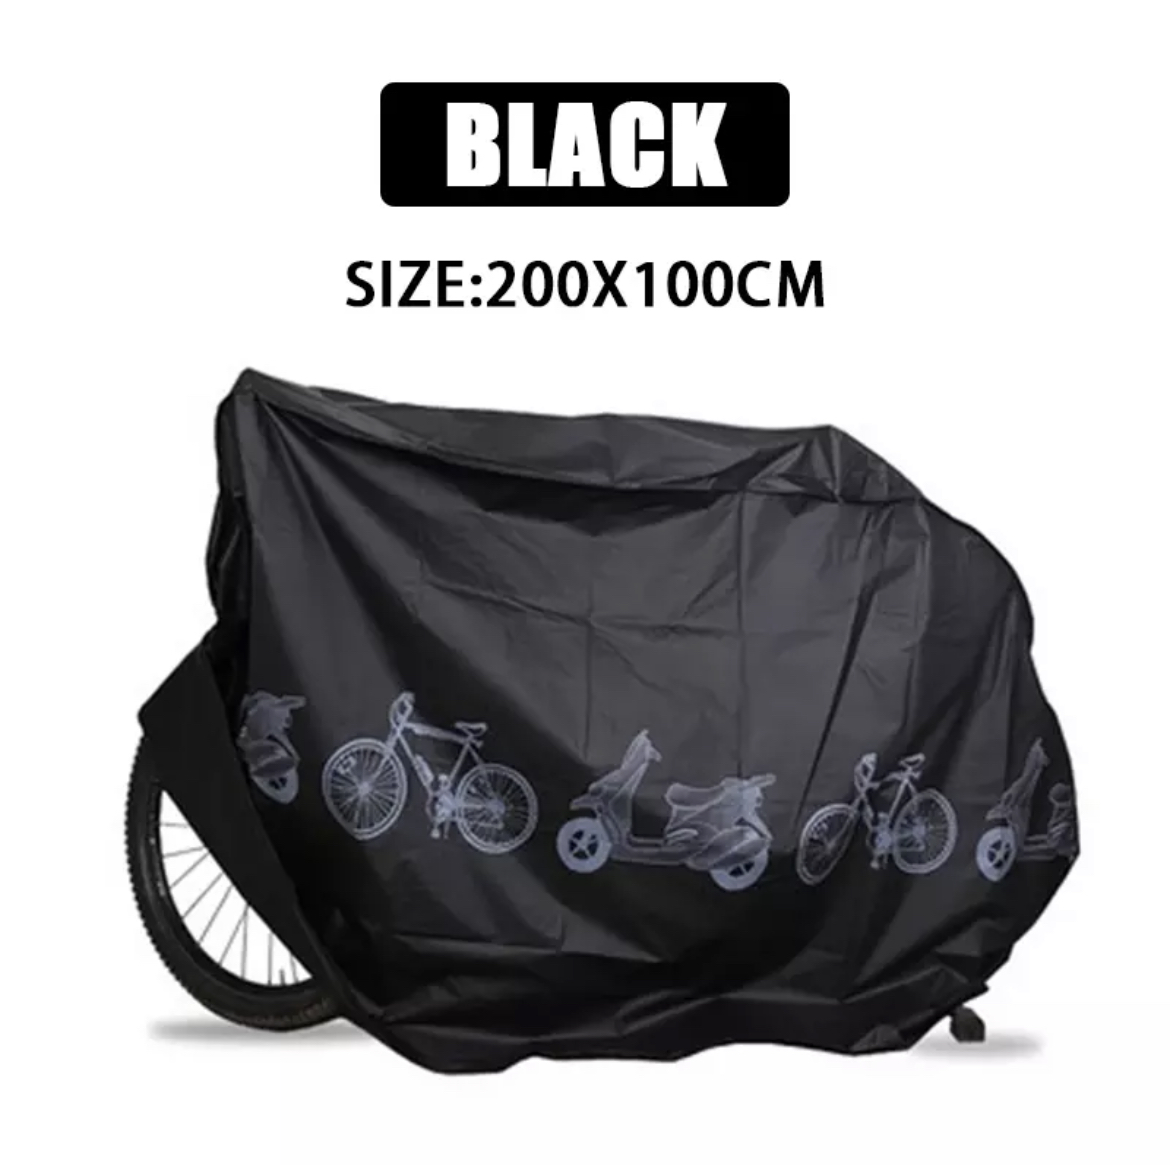 Portable Waterproof Bicycle Rain Dust Cover